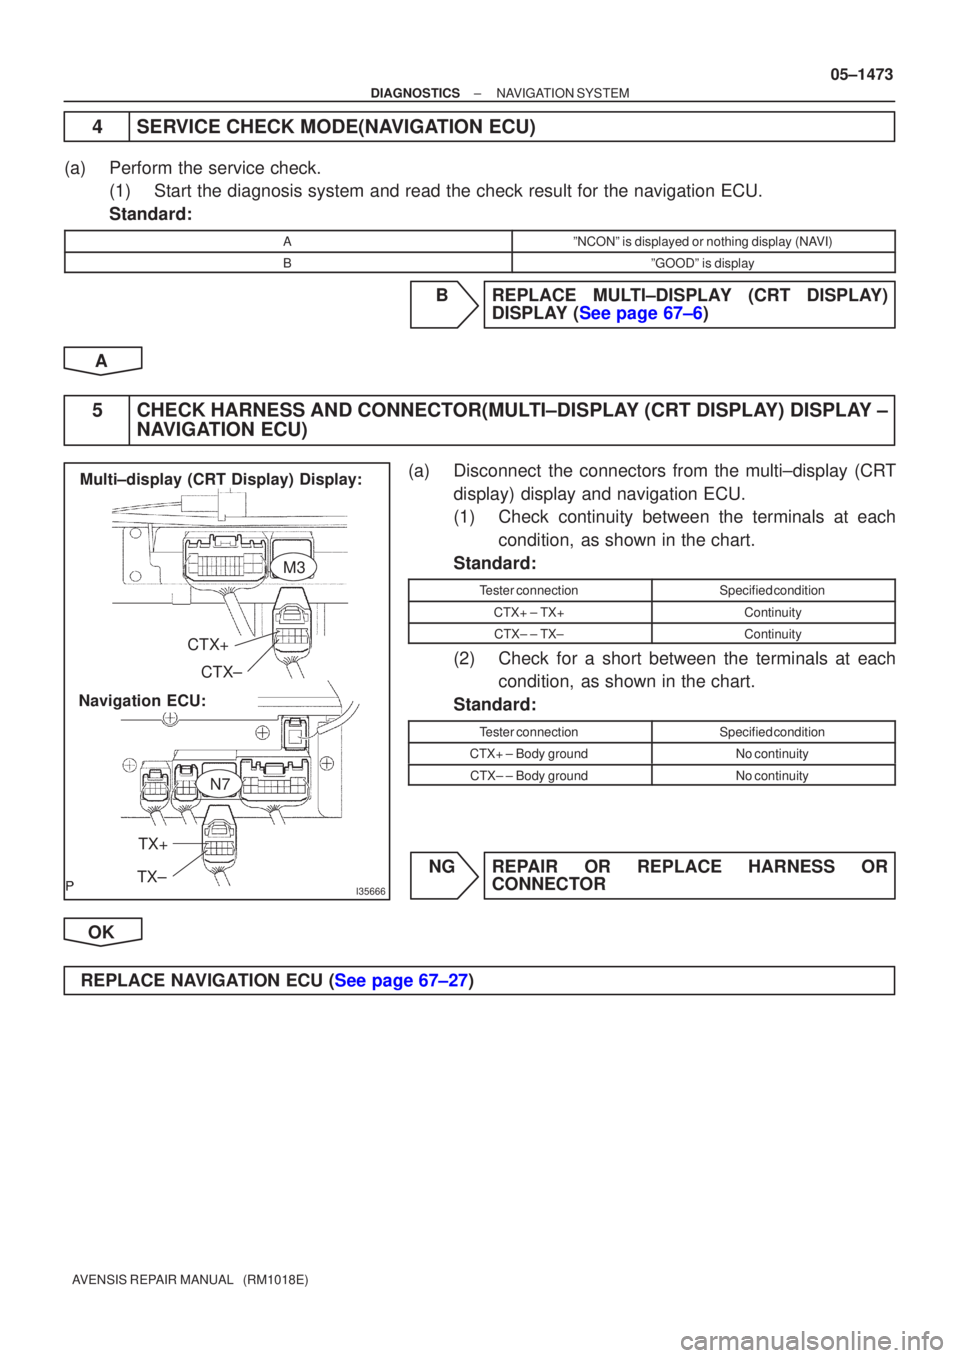 TOYOTA AVENSIS 2005  Service Repair Manual I35666
CTX+CTX±
TX+
TX±
Navigation ECU: Multi±display (CRT Display) Display:
M3
N7
±
DIAGNOSTICS NAVIGATION SYSTEM
05±1473
AVENSIS REPAIR MANUAL   (RM1018E)
4SERVICE CHECK MODE(NAVIGATION ECU)
(a